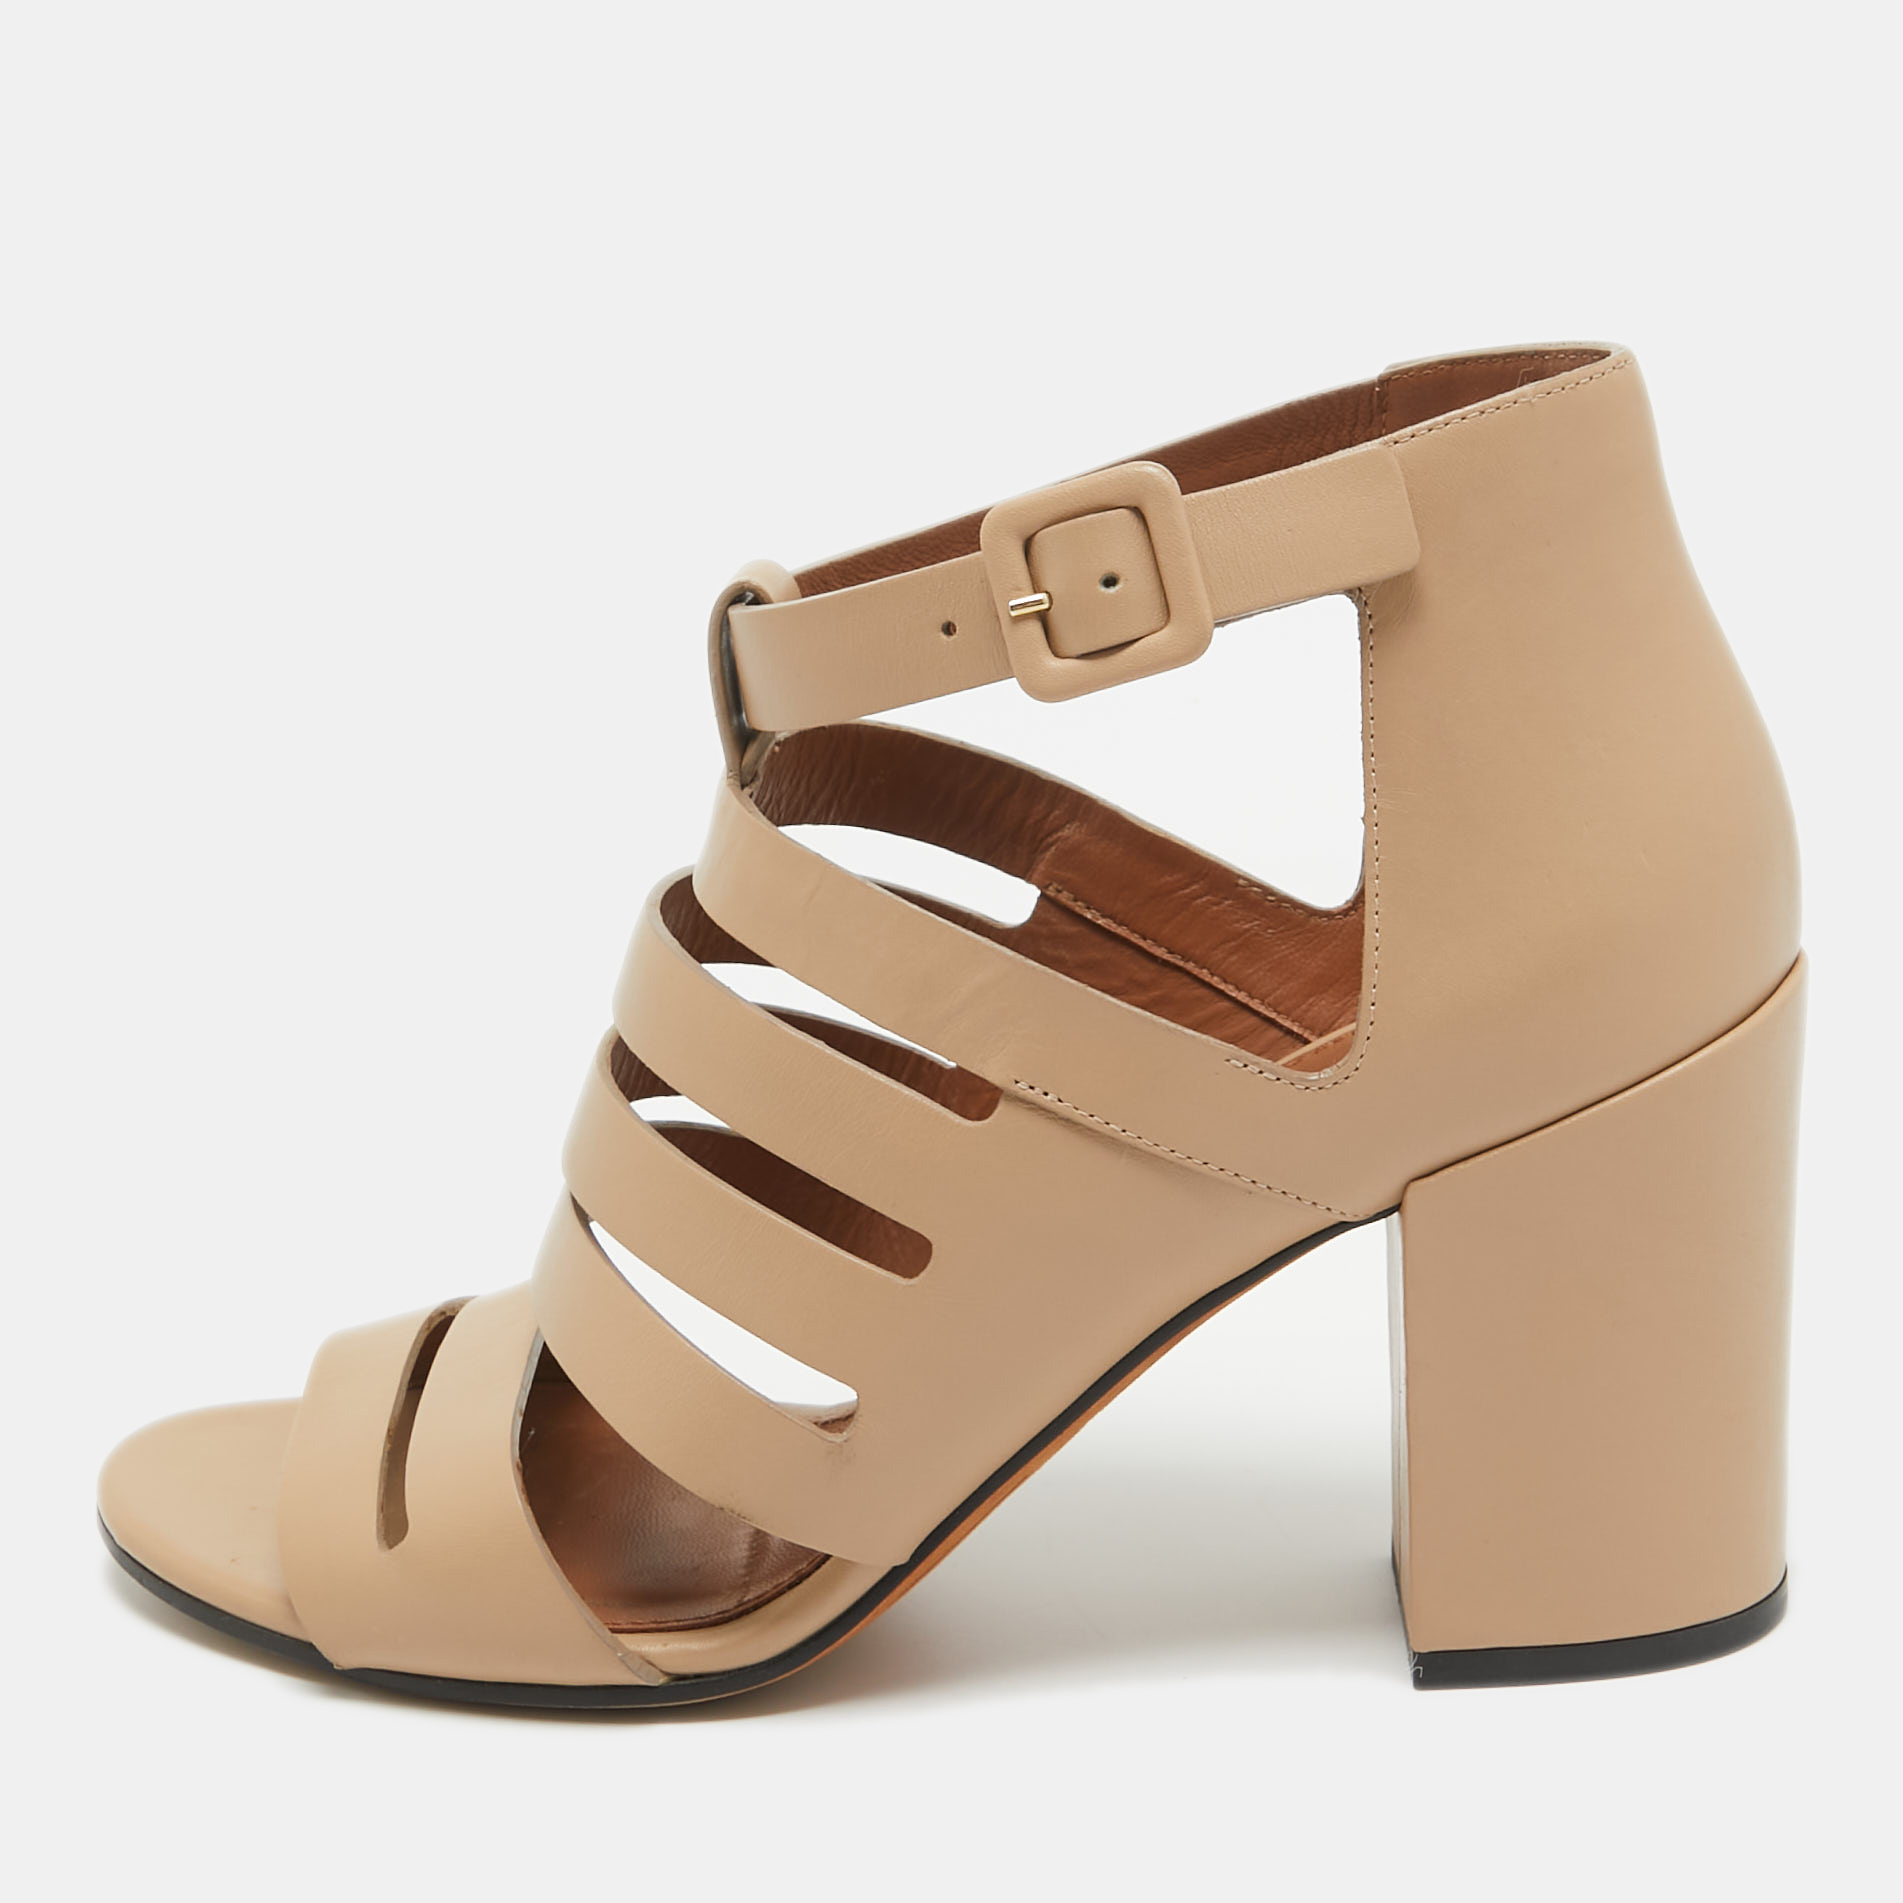 Givenchy beige leather gladiator block heel ankle strap sandals size 38